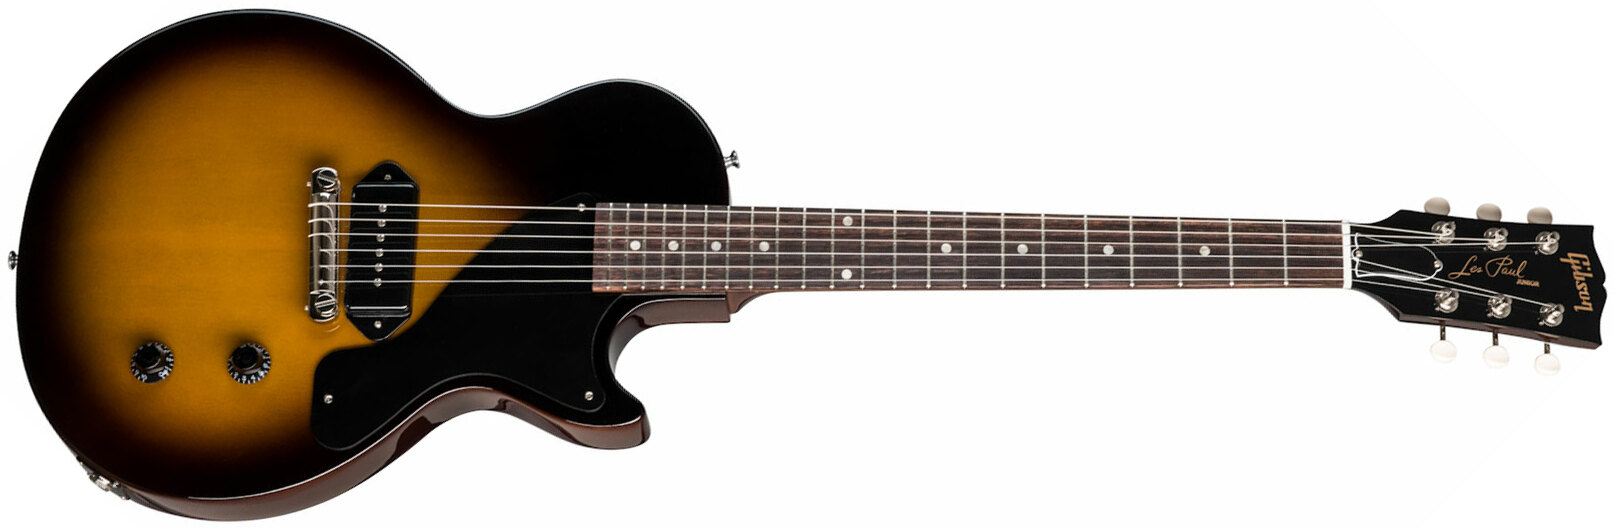 Gibson Les Paul Junior Original P90 Ht Rw - Vintage Tobacco Burst - Single cut electric guitar - Main picture